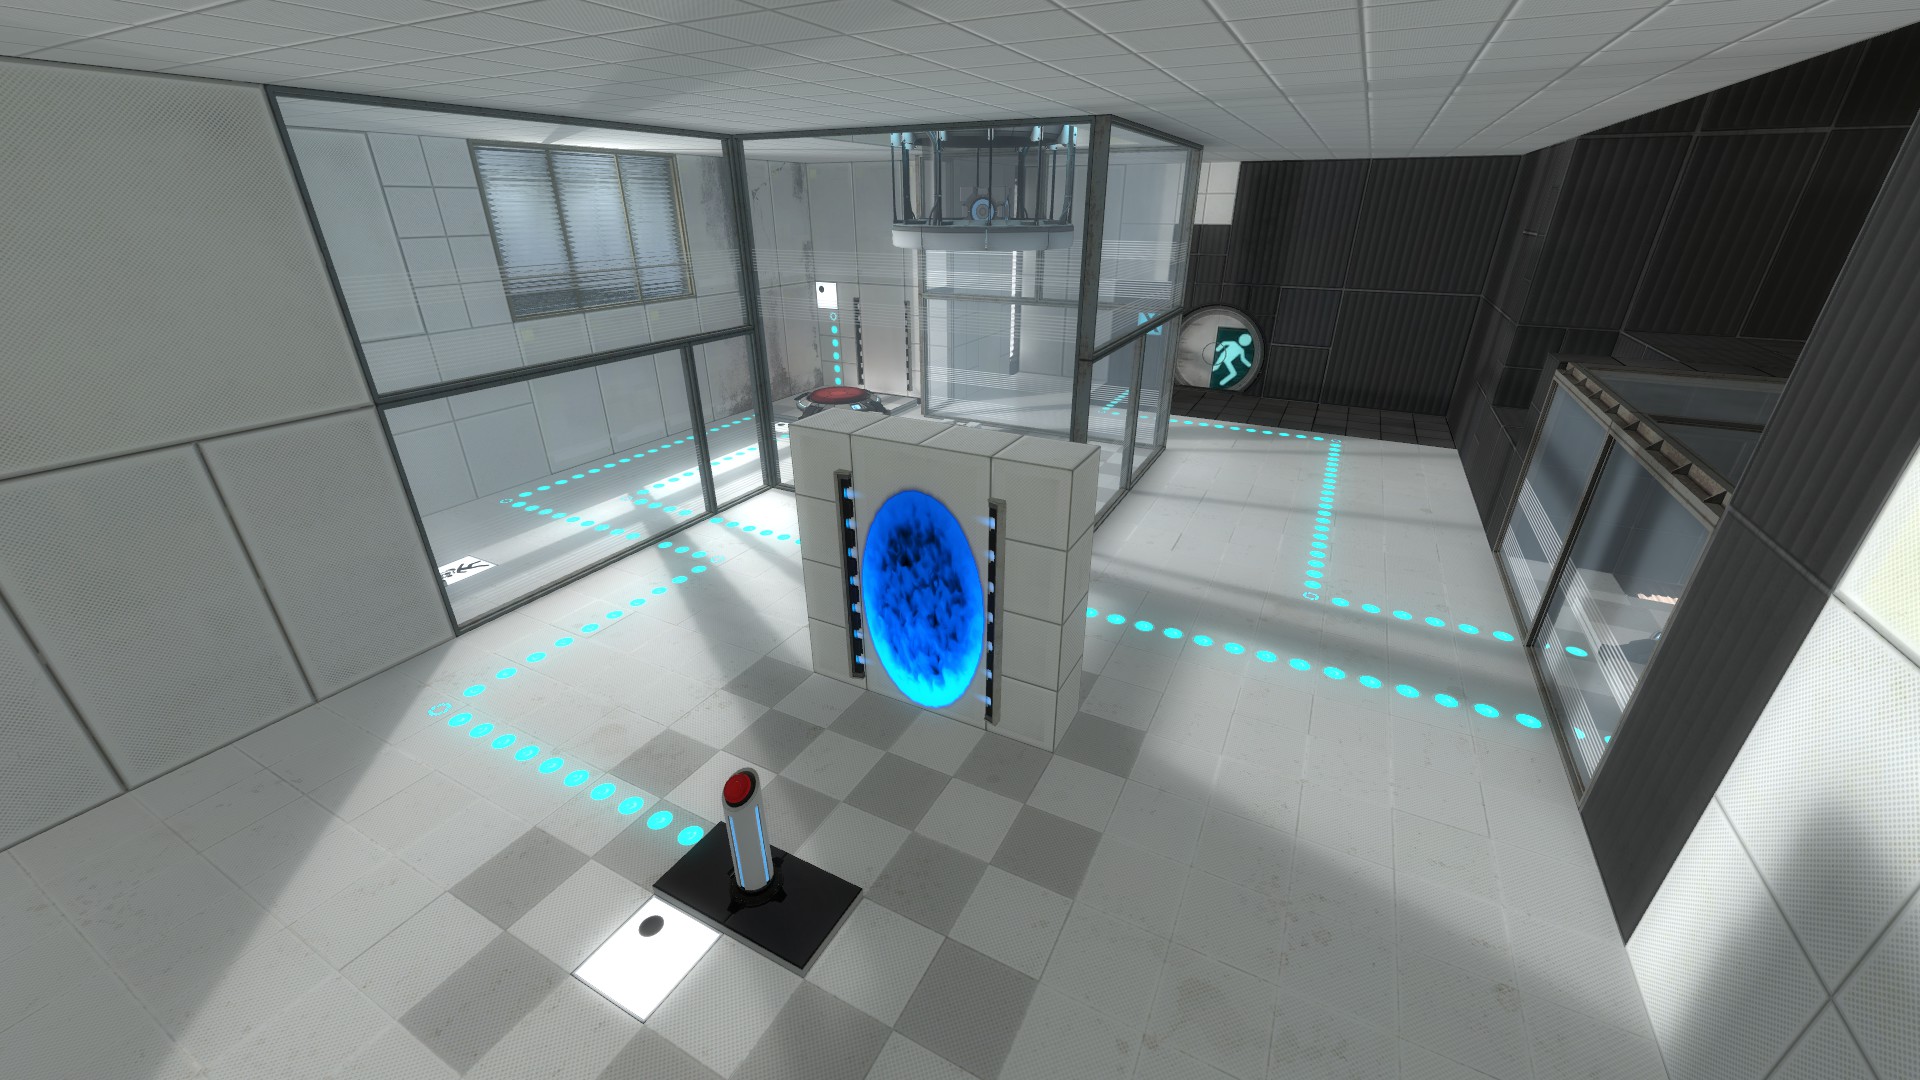 Камеры портал 1. Portal 2 Test Chamber 01. Portal 2 комната 01. Модель камеры Portal 2. Portal 2 тестовая камера 1.